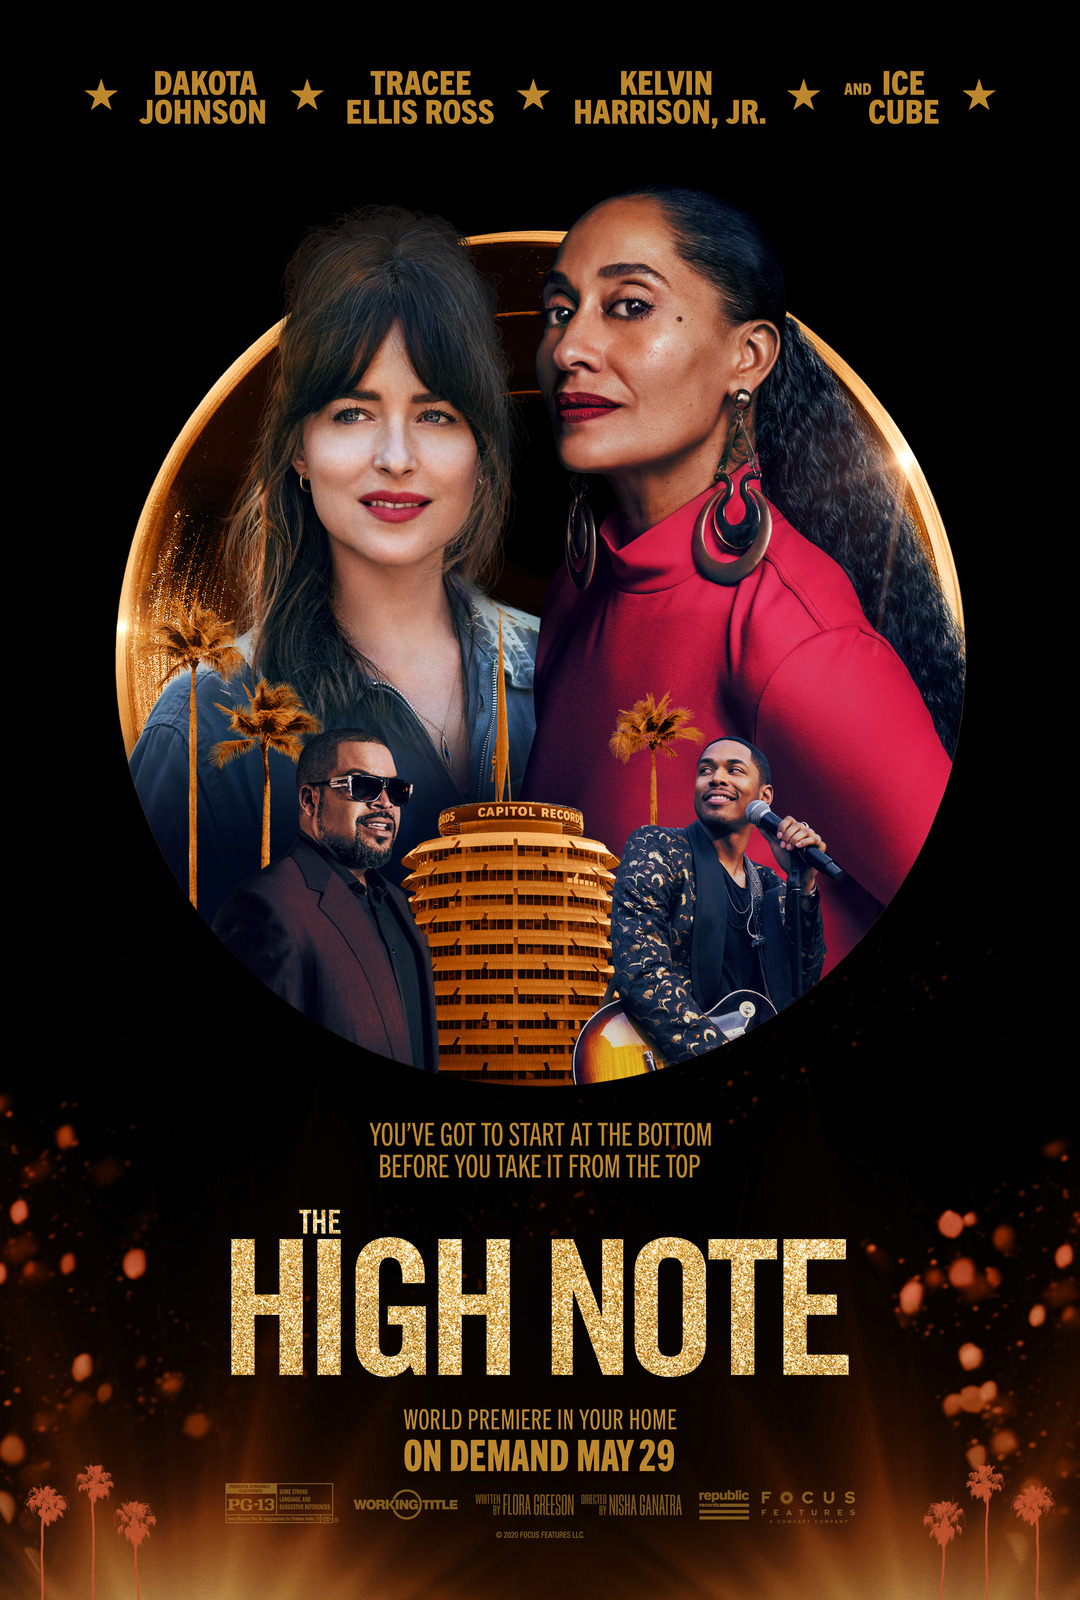 New Movie: The High Note Starring Tracee Ellis Ross & Dakota Johnson